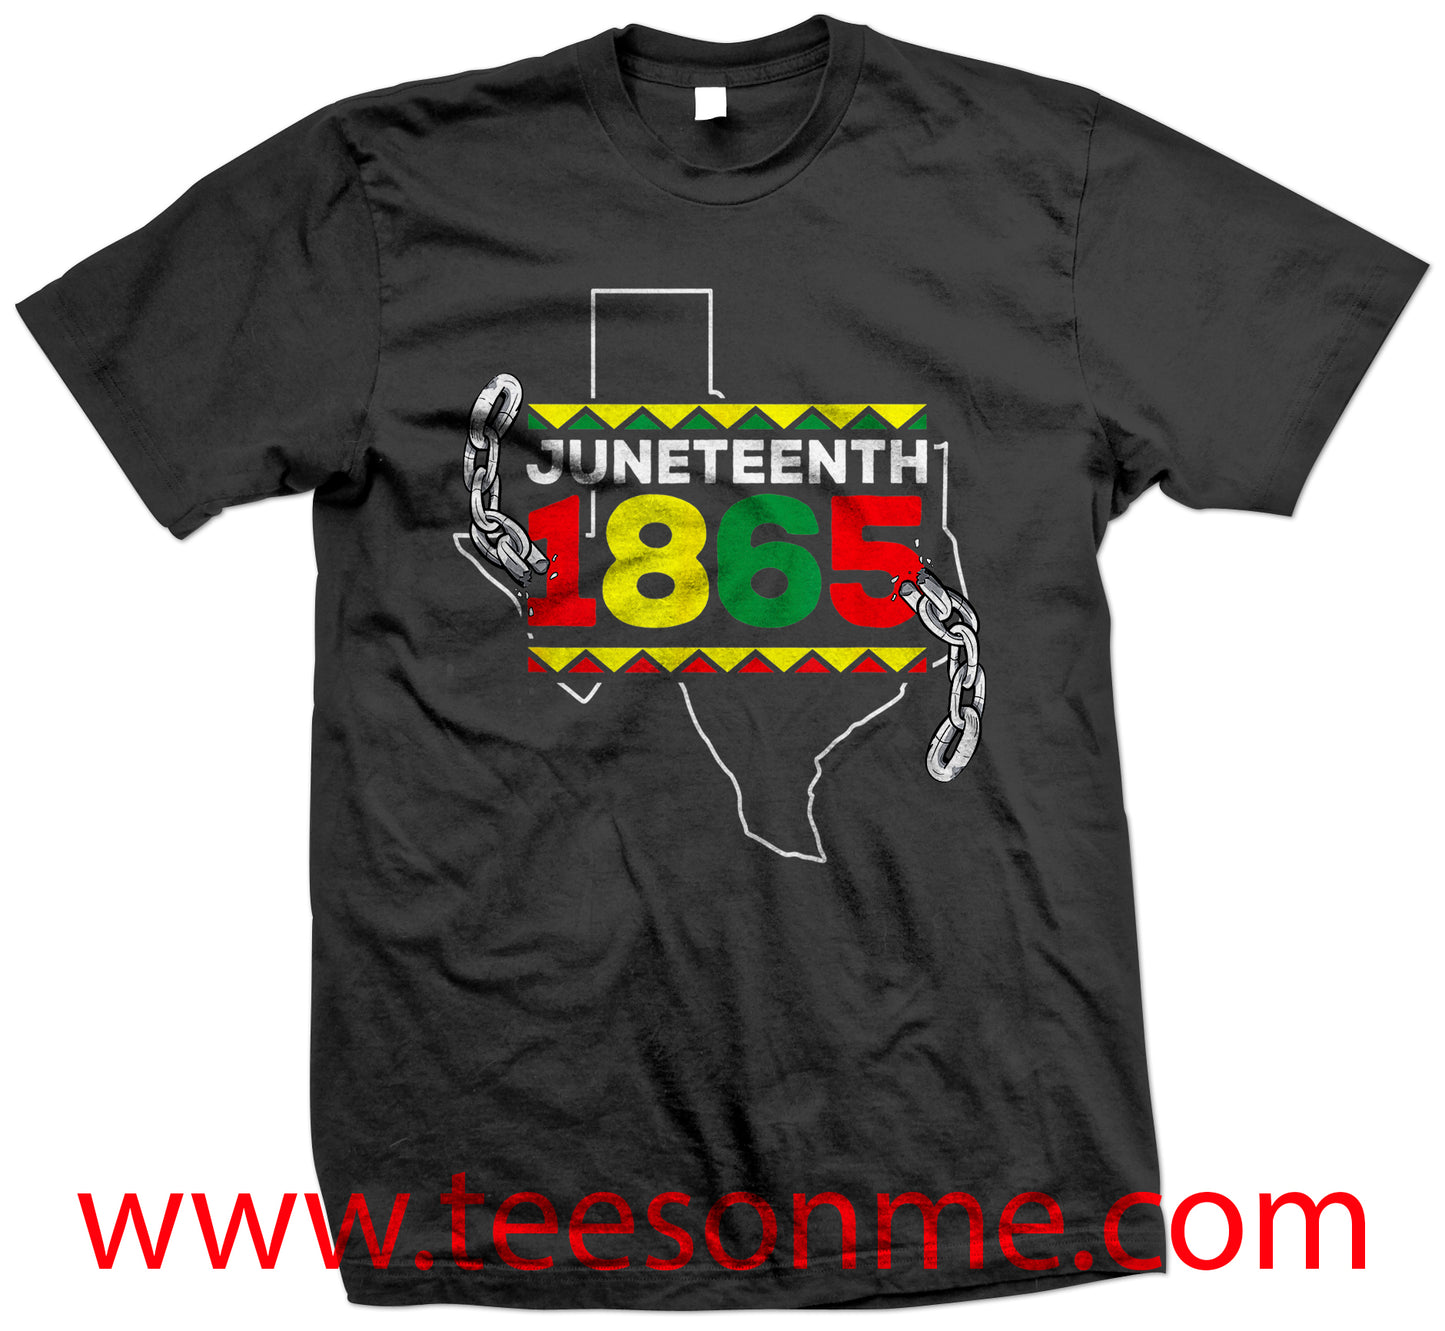 Juneteenth In Texas Tshirt - Unisex